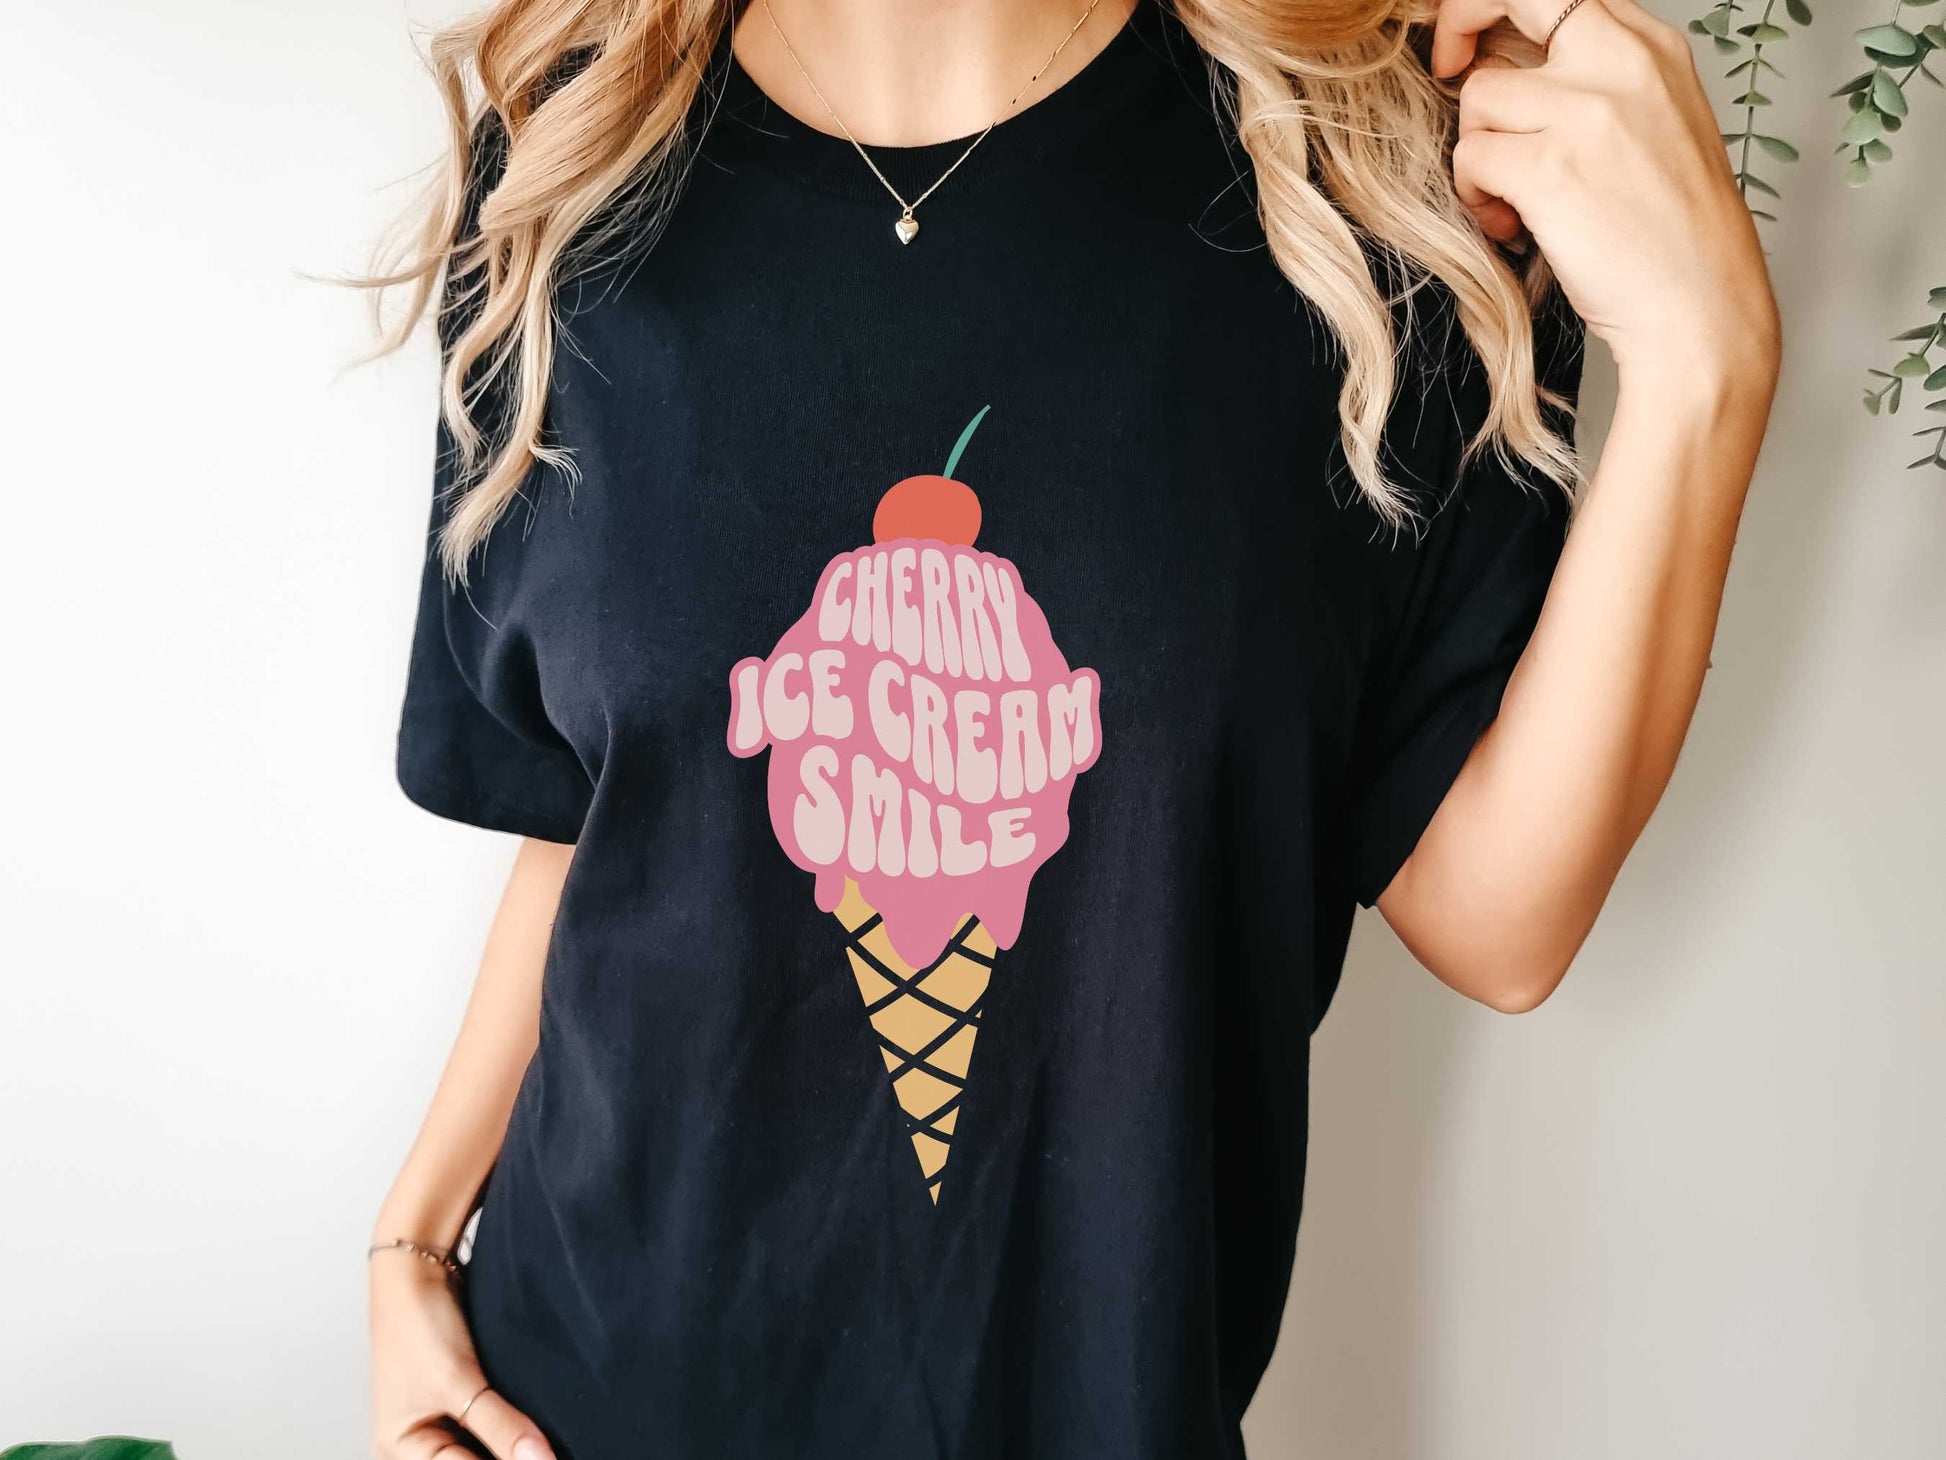 Duran Duran Rio "Cherry Ice Cream Smile" T-Shirt in Black